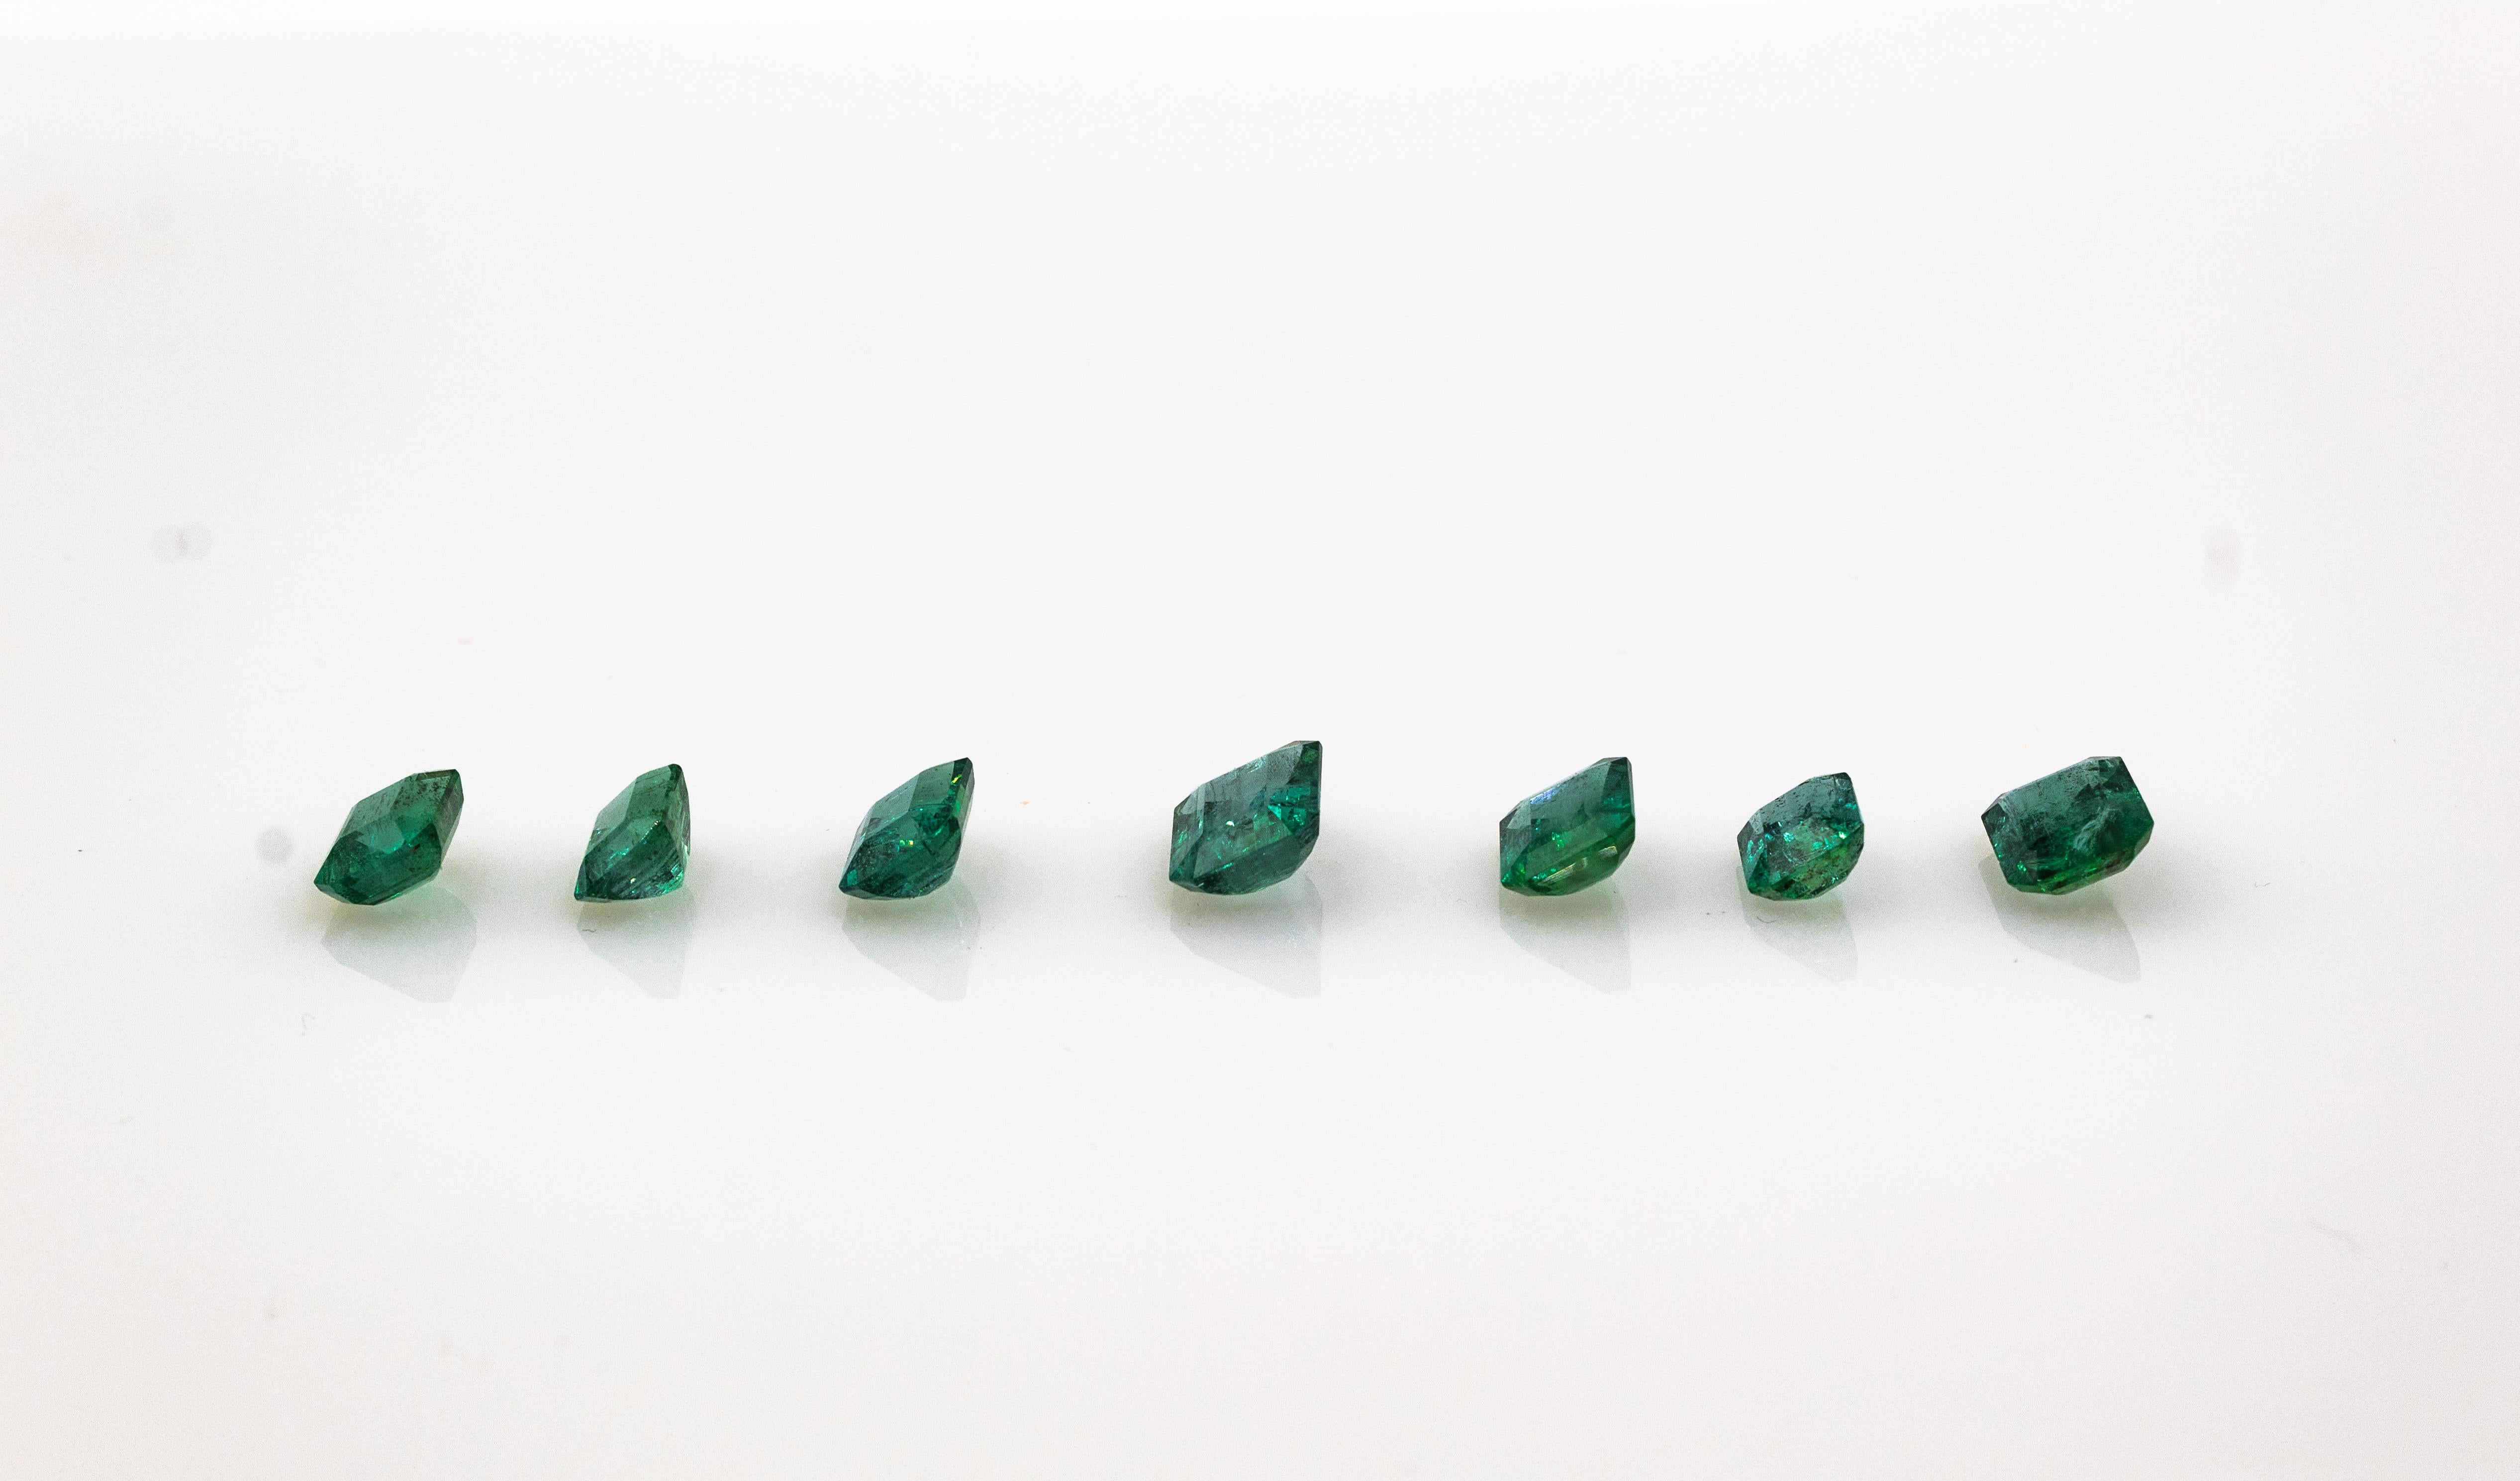 Certifiable Zambia Octagon Cut 2.98 Carat Emerald Loose Gemstone 5